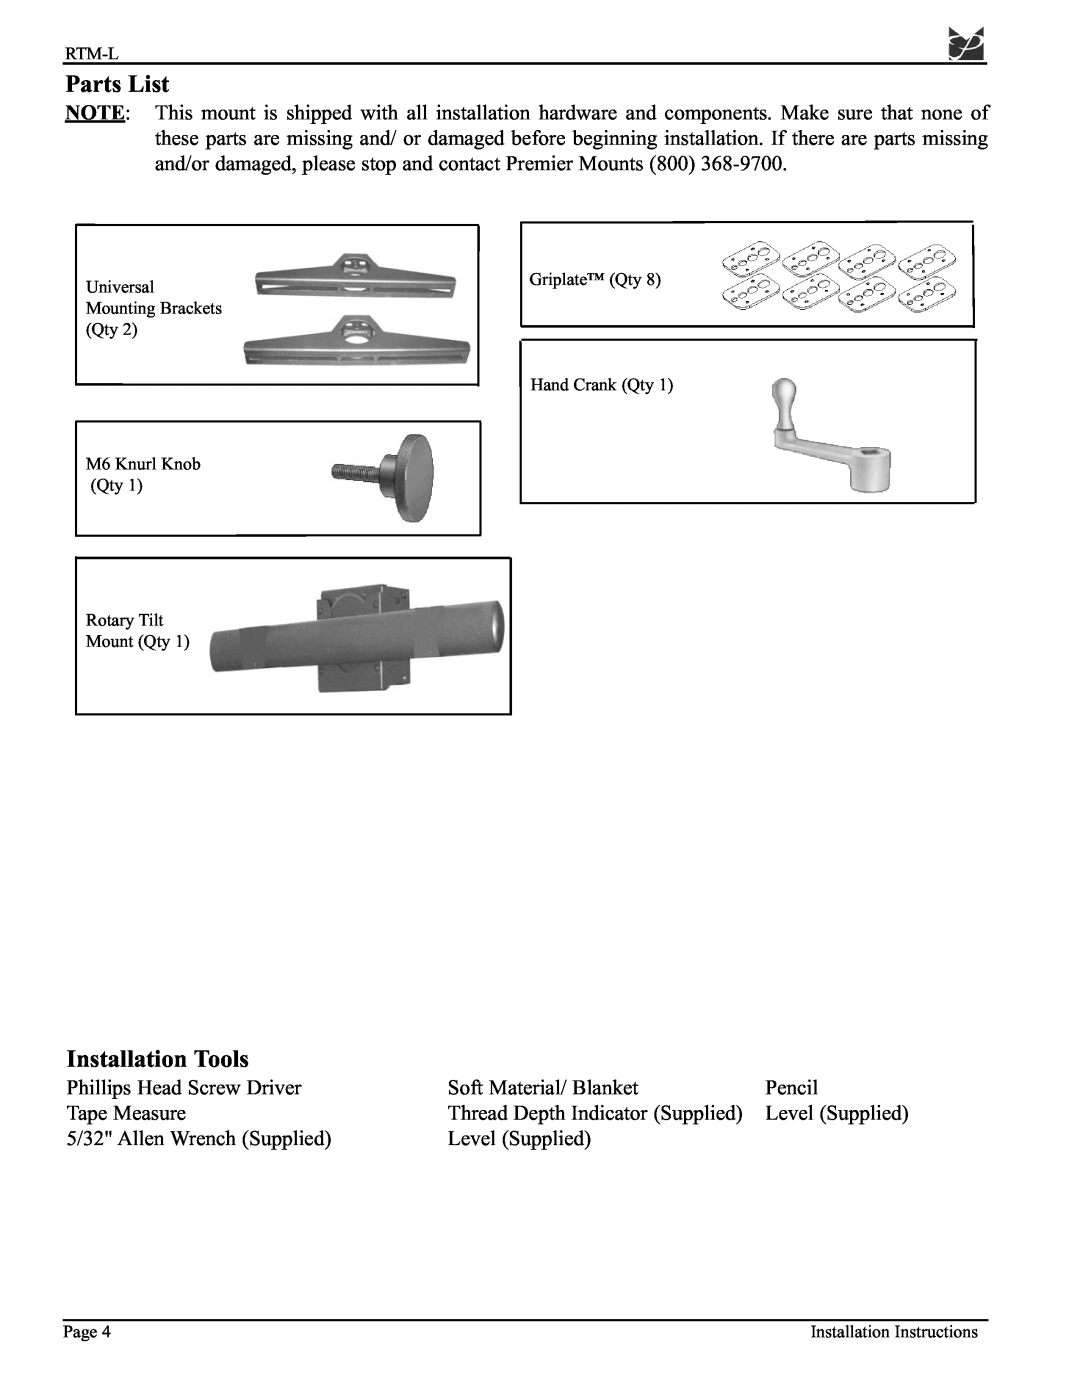 Premier Mounts PSD-BWL installation manual Parts List, Installation Tools 